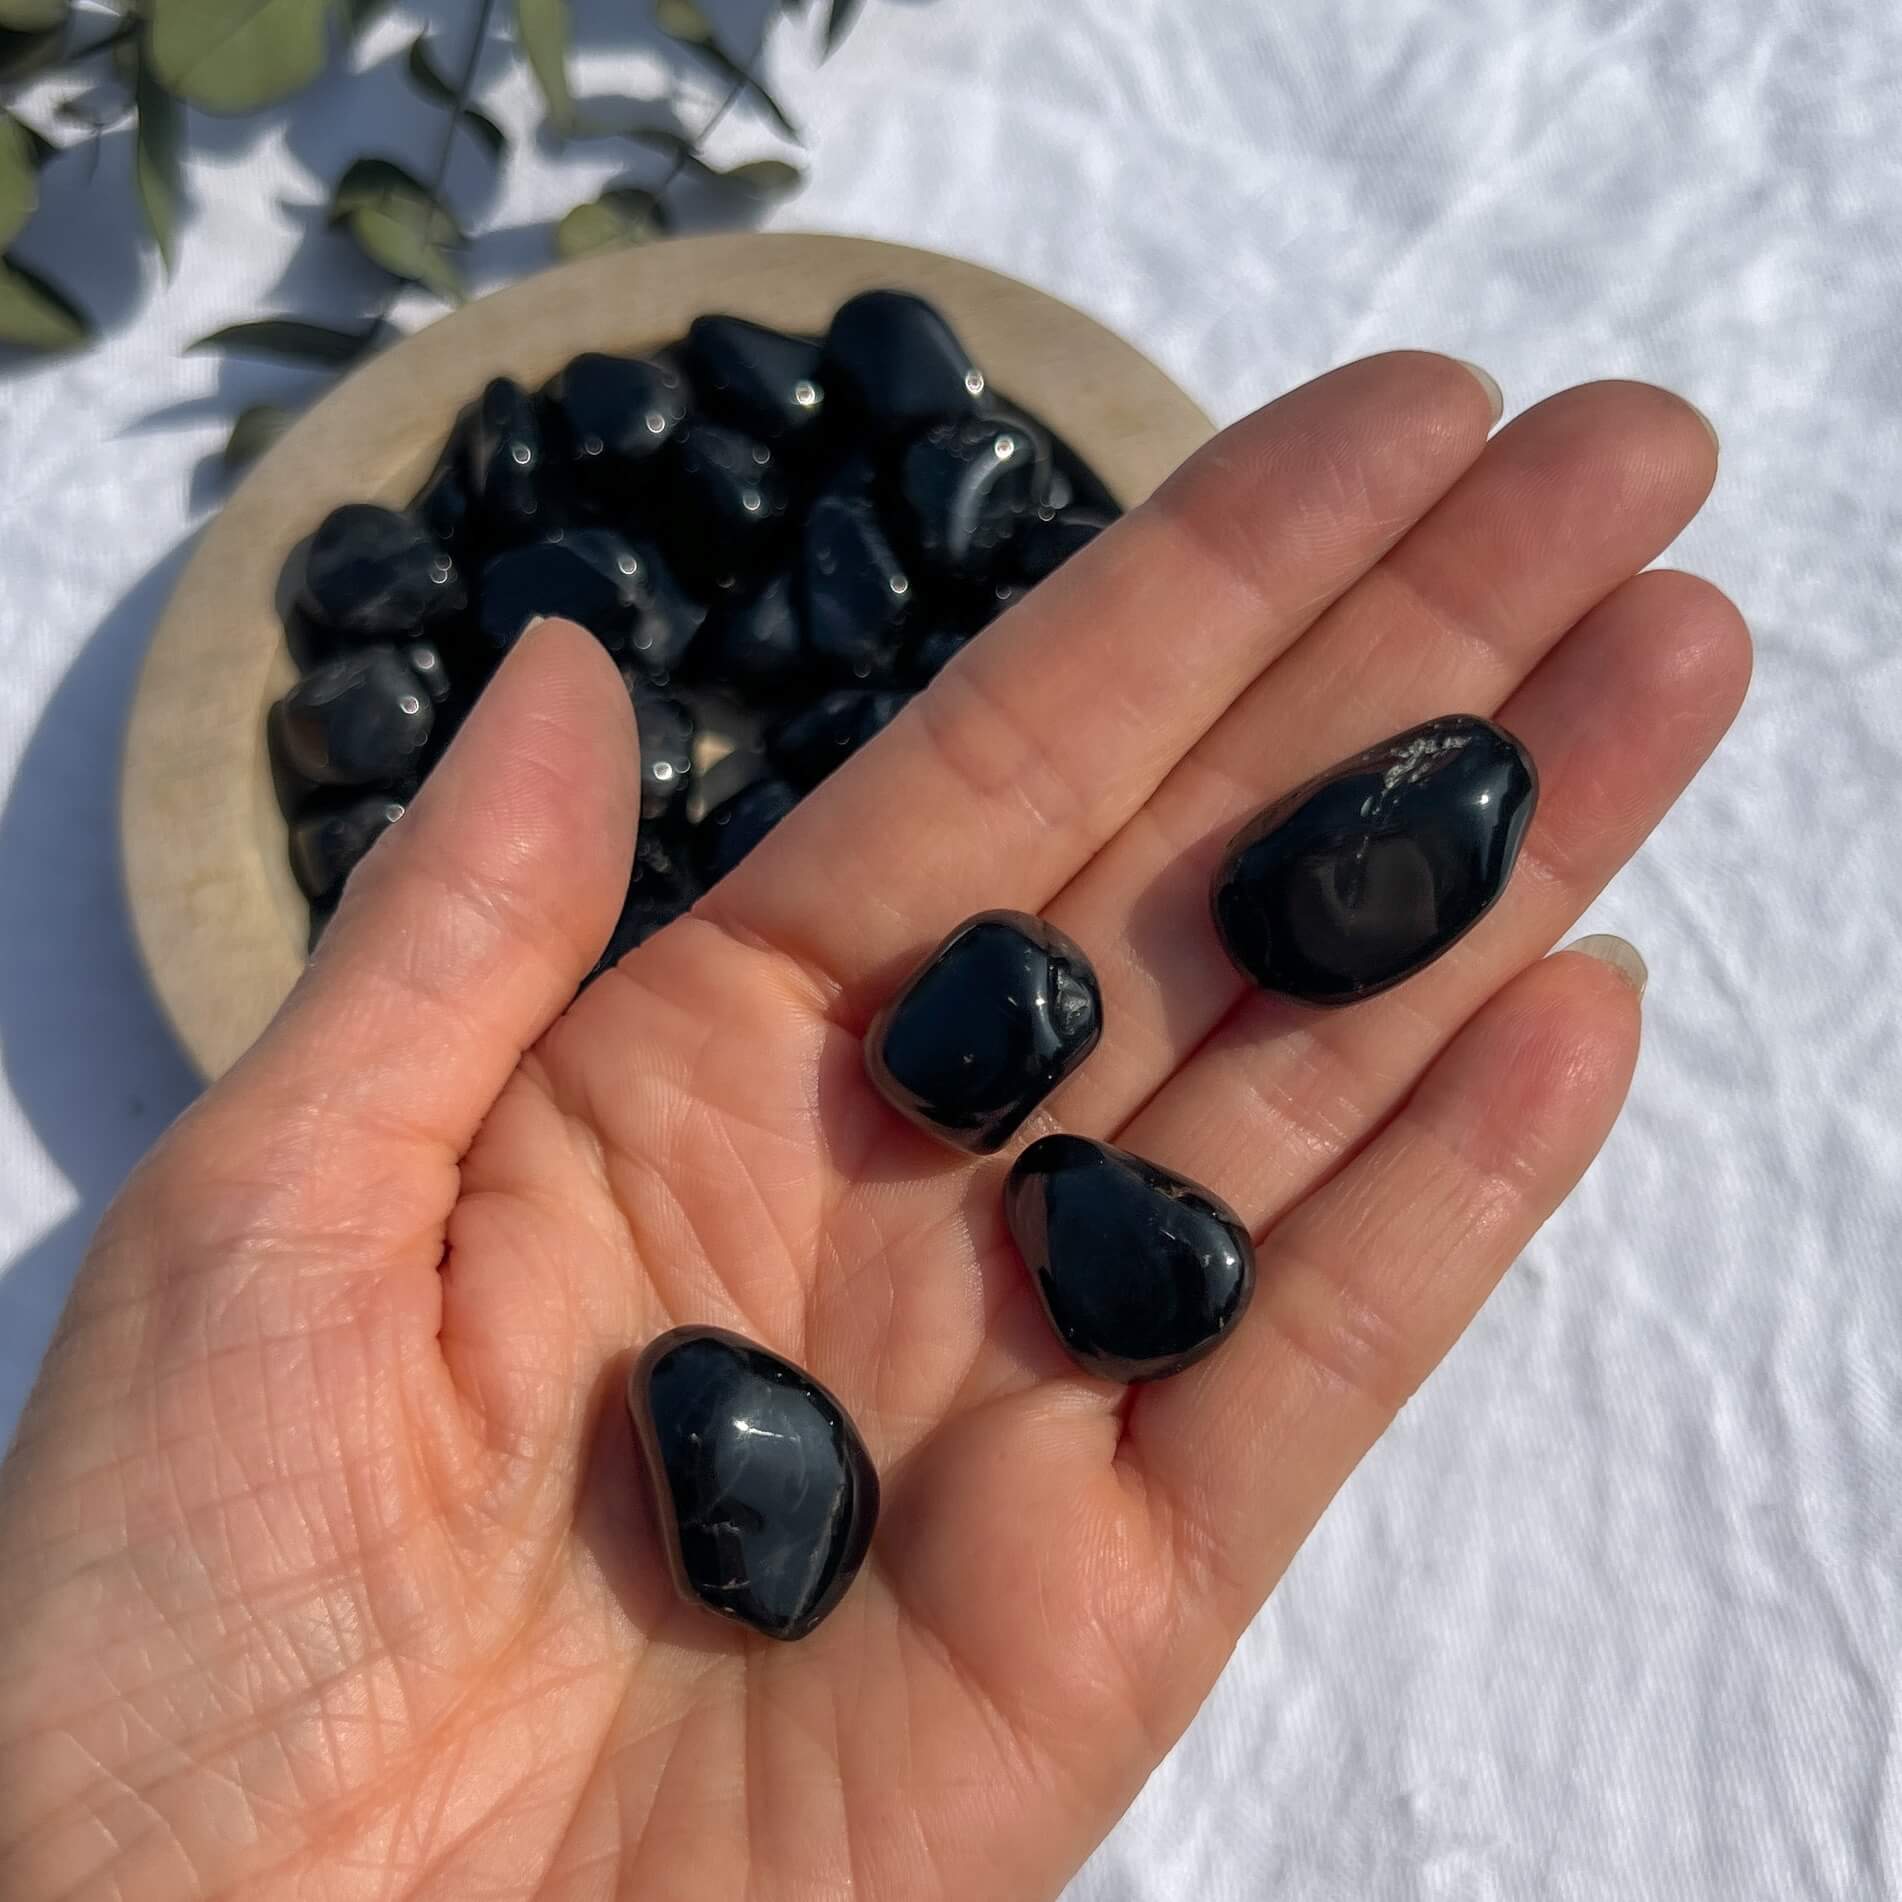 An open palm holding small black tourmaline crystal tumblestones